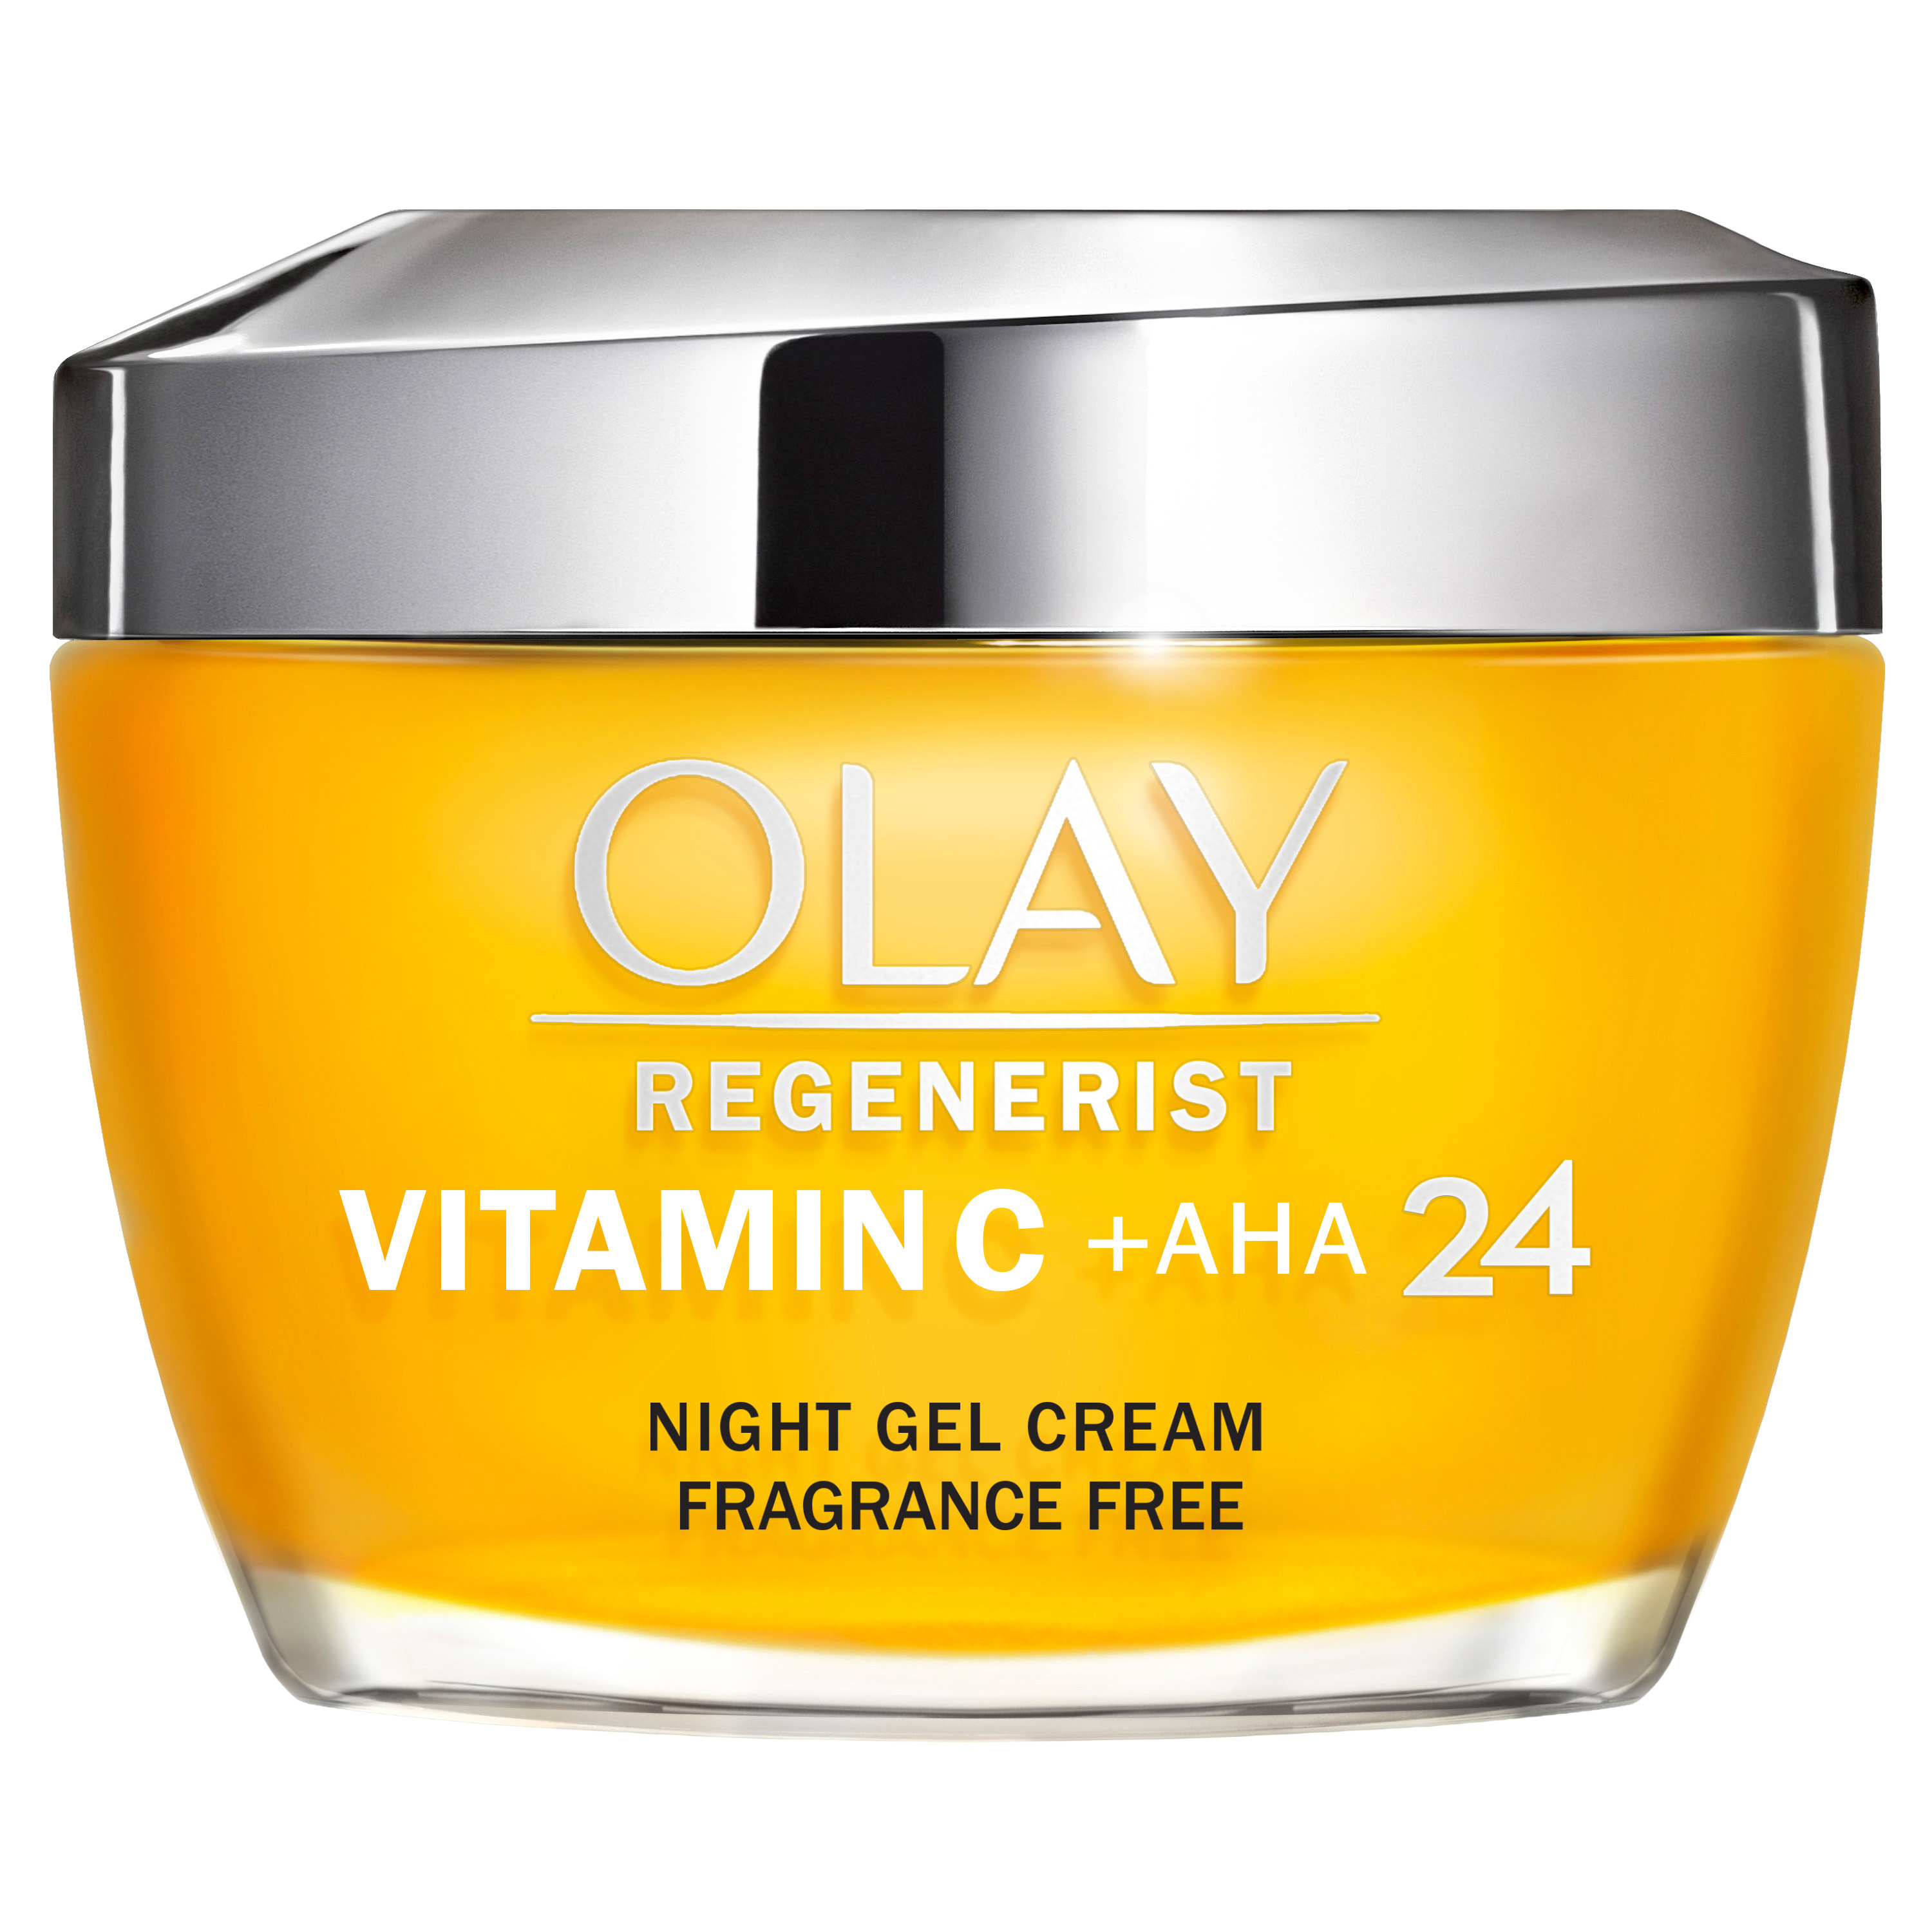 Productpot: OLAY REGENERIST - Vitamin C + AHA 24 - night gel cream